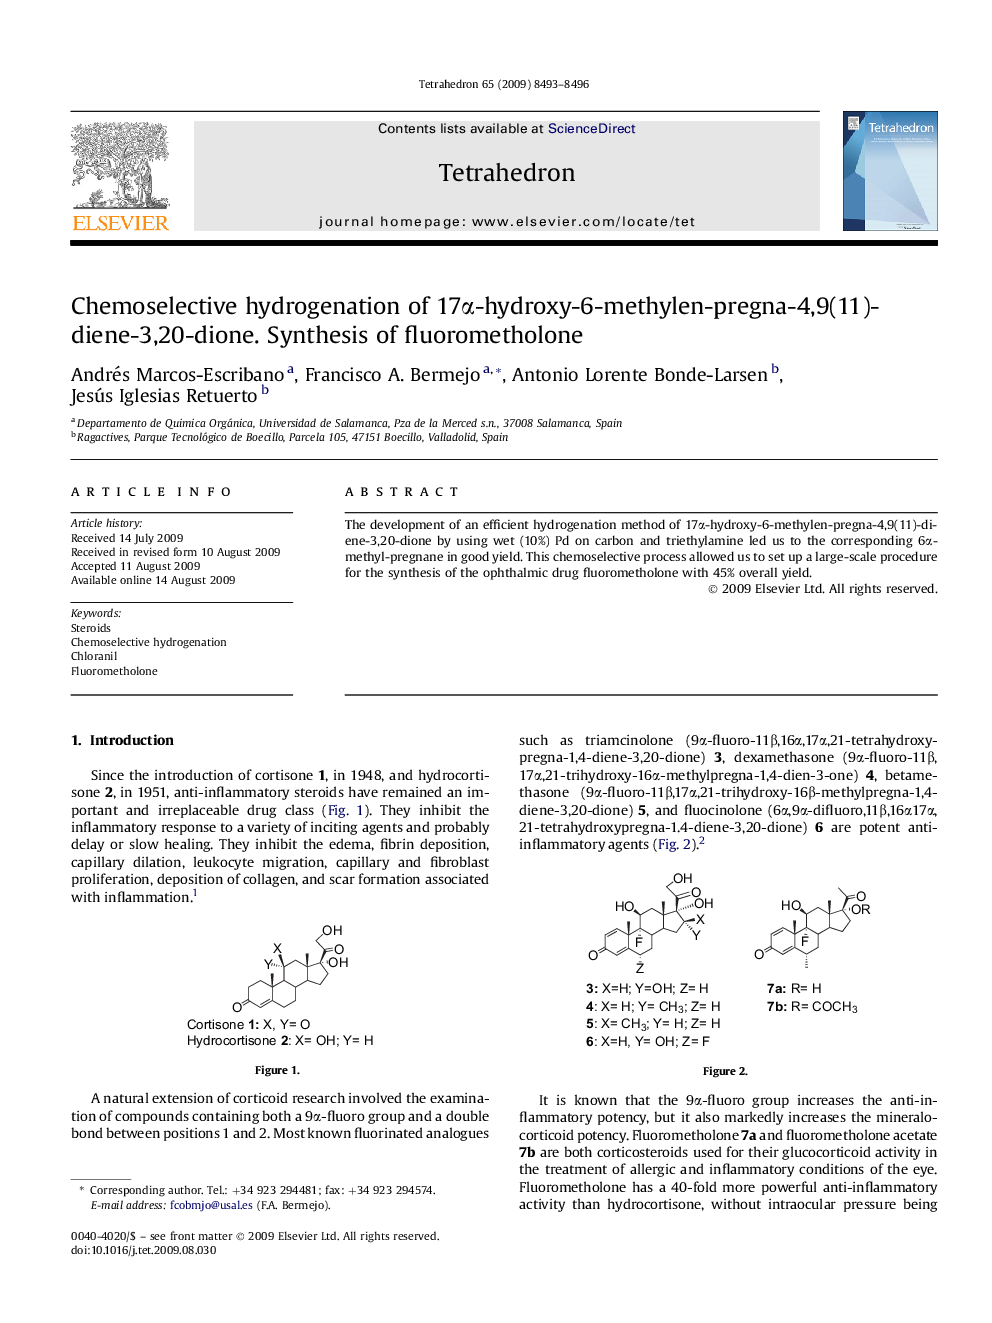 Chemoselective hydrogenation of 17Î±-hydroxy-6-methylen-pregna-4,9(11)-diene-3,20-dione. Synthesis of fluorometholone